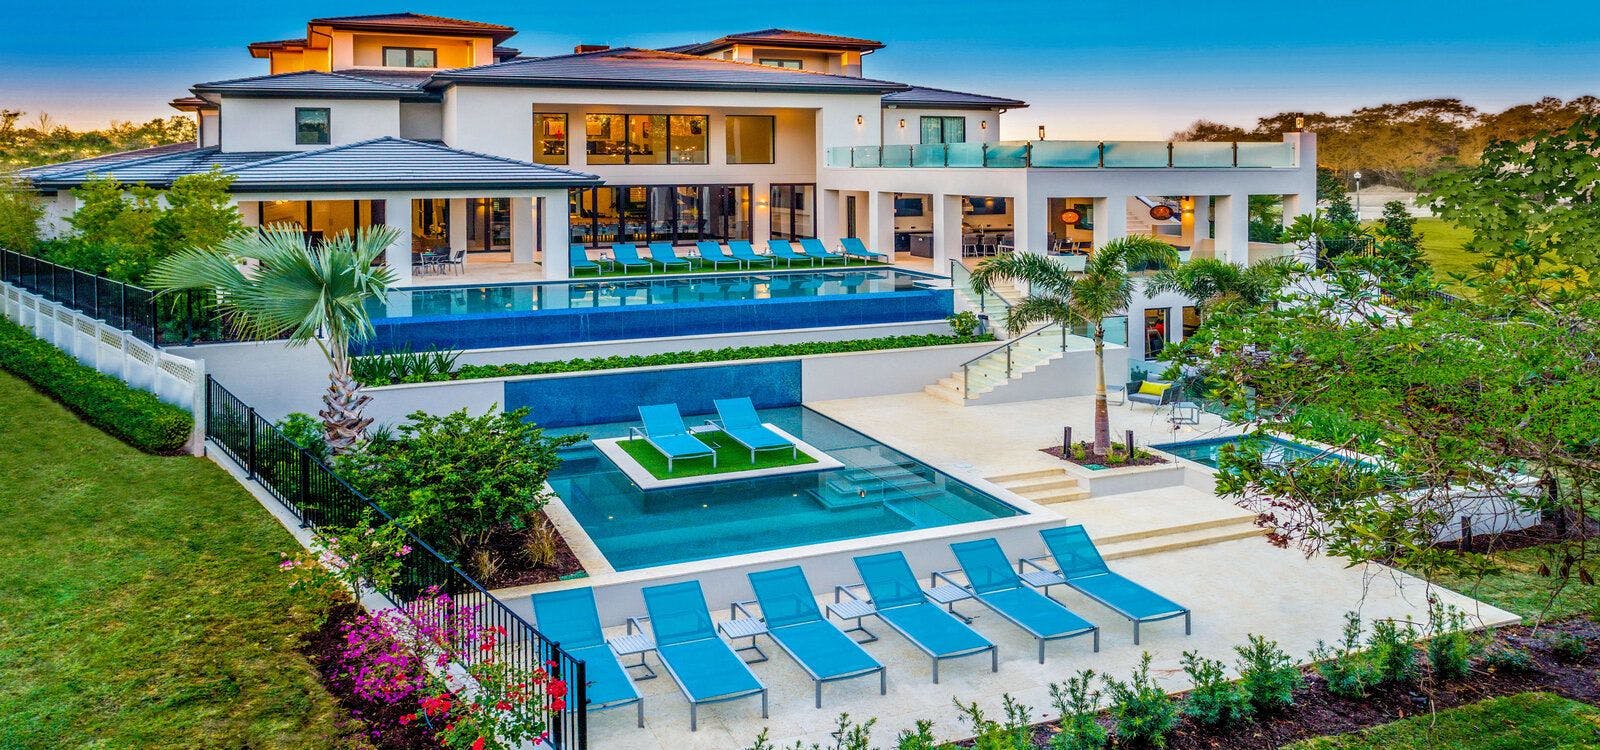 Luxury Orlando business accommodation like Reunion Resort 15000